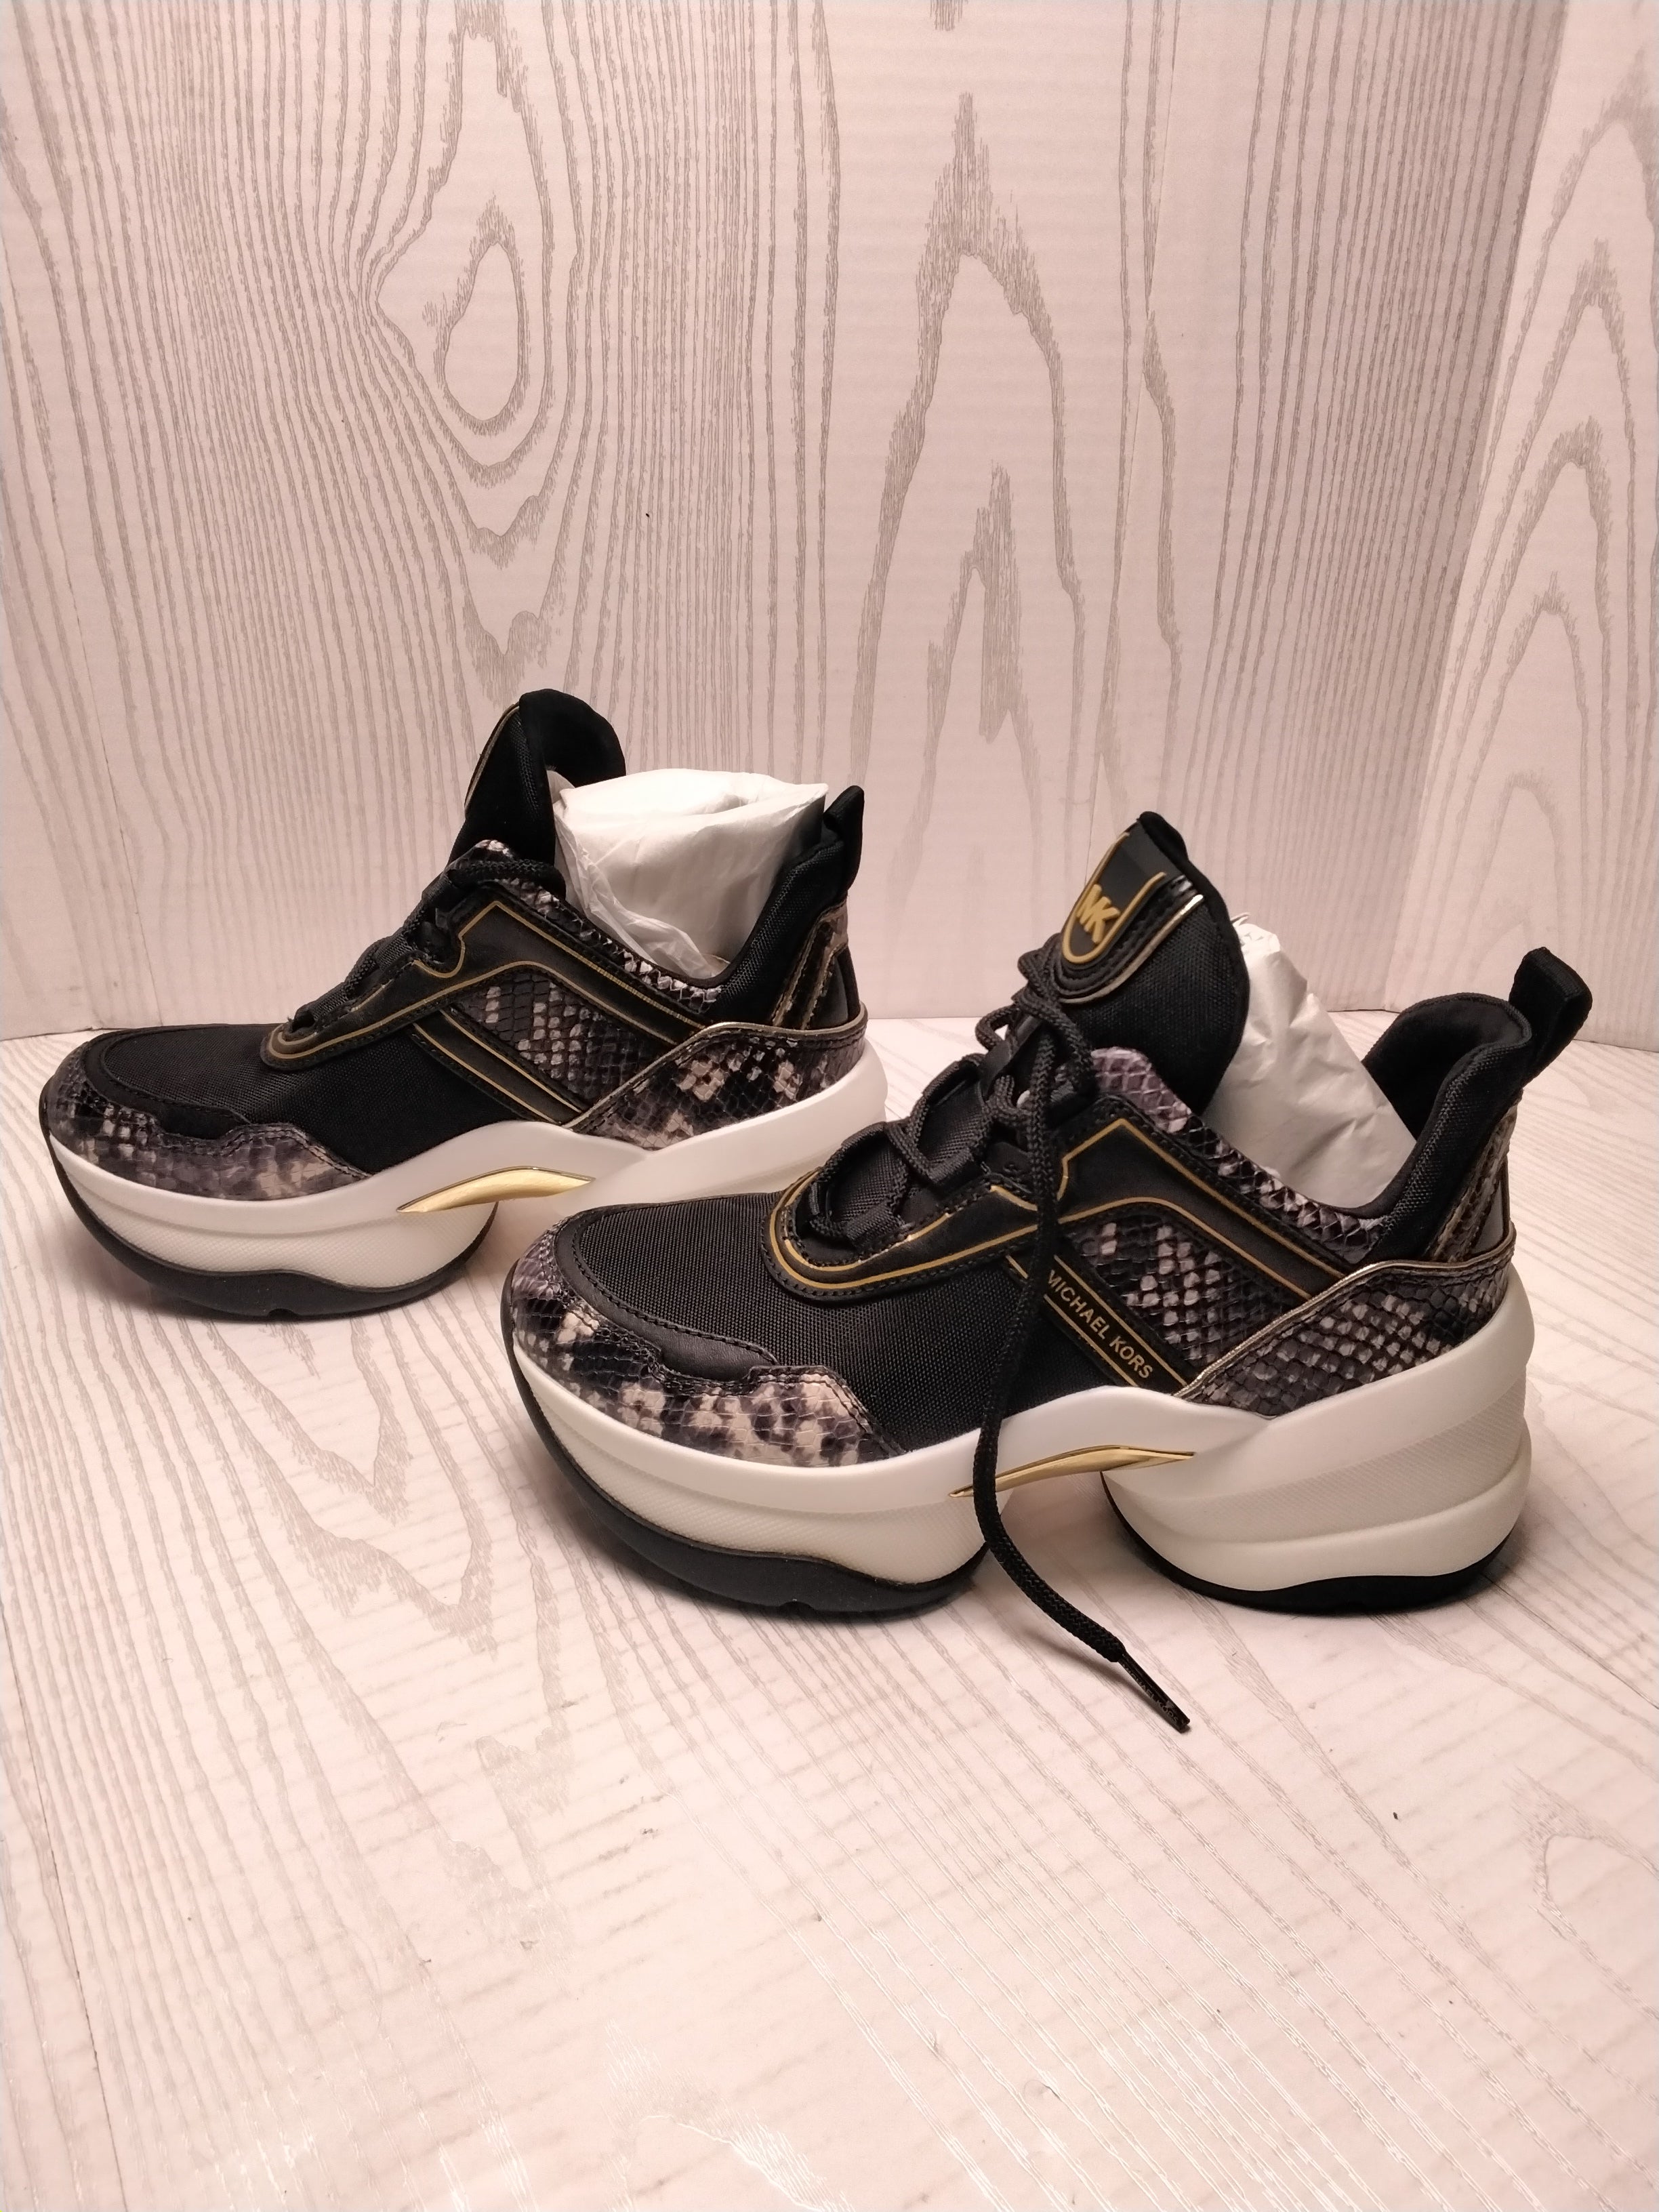 Michael Kors Women's Olympia Trainer Tech Canvas Shoes - Black, Size 5.5 (7928683462894)